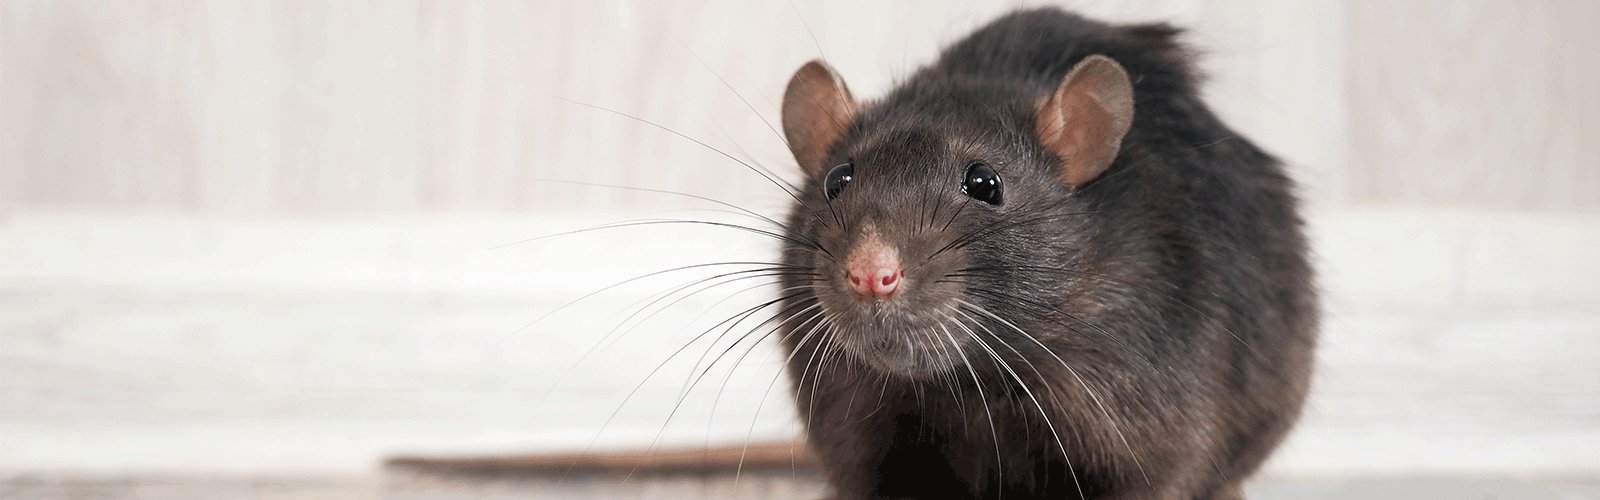 identify_rats